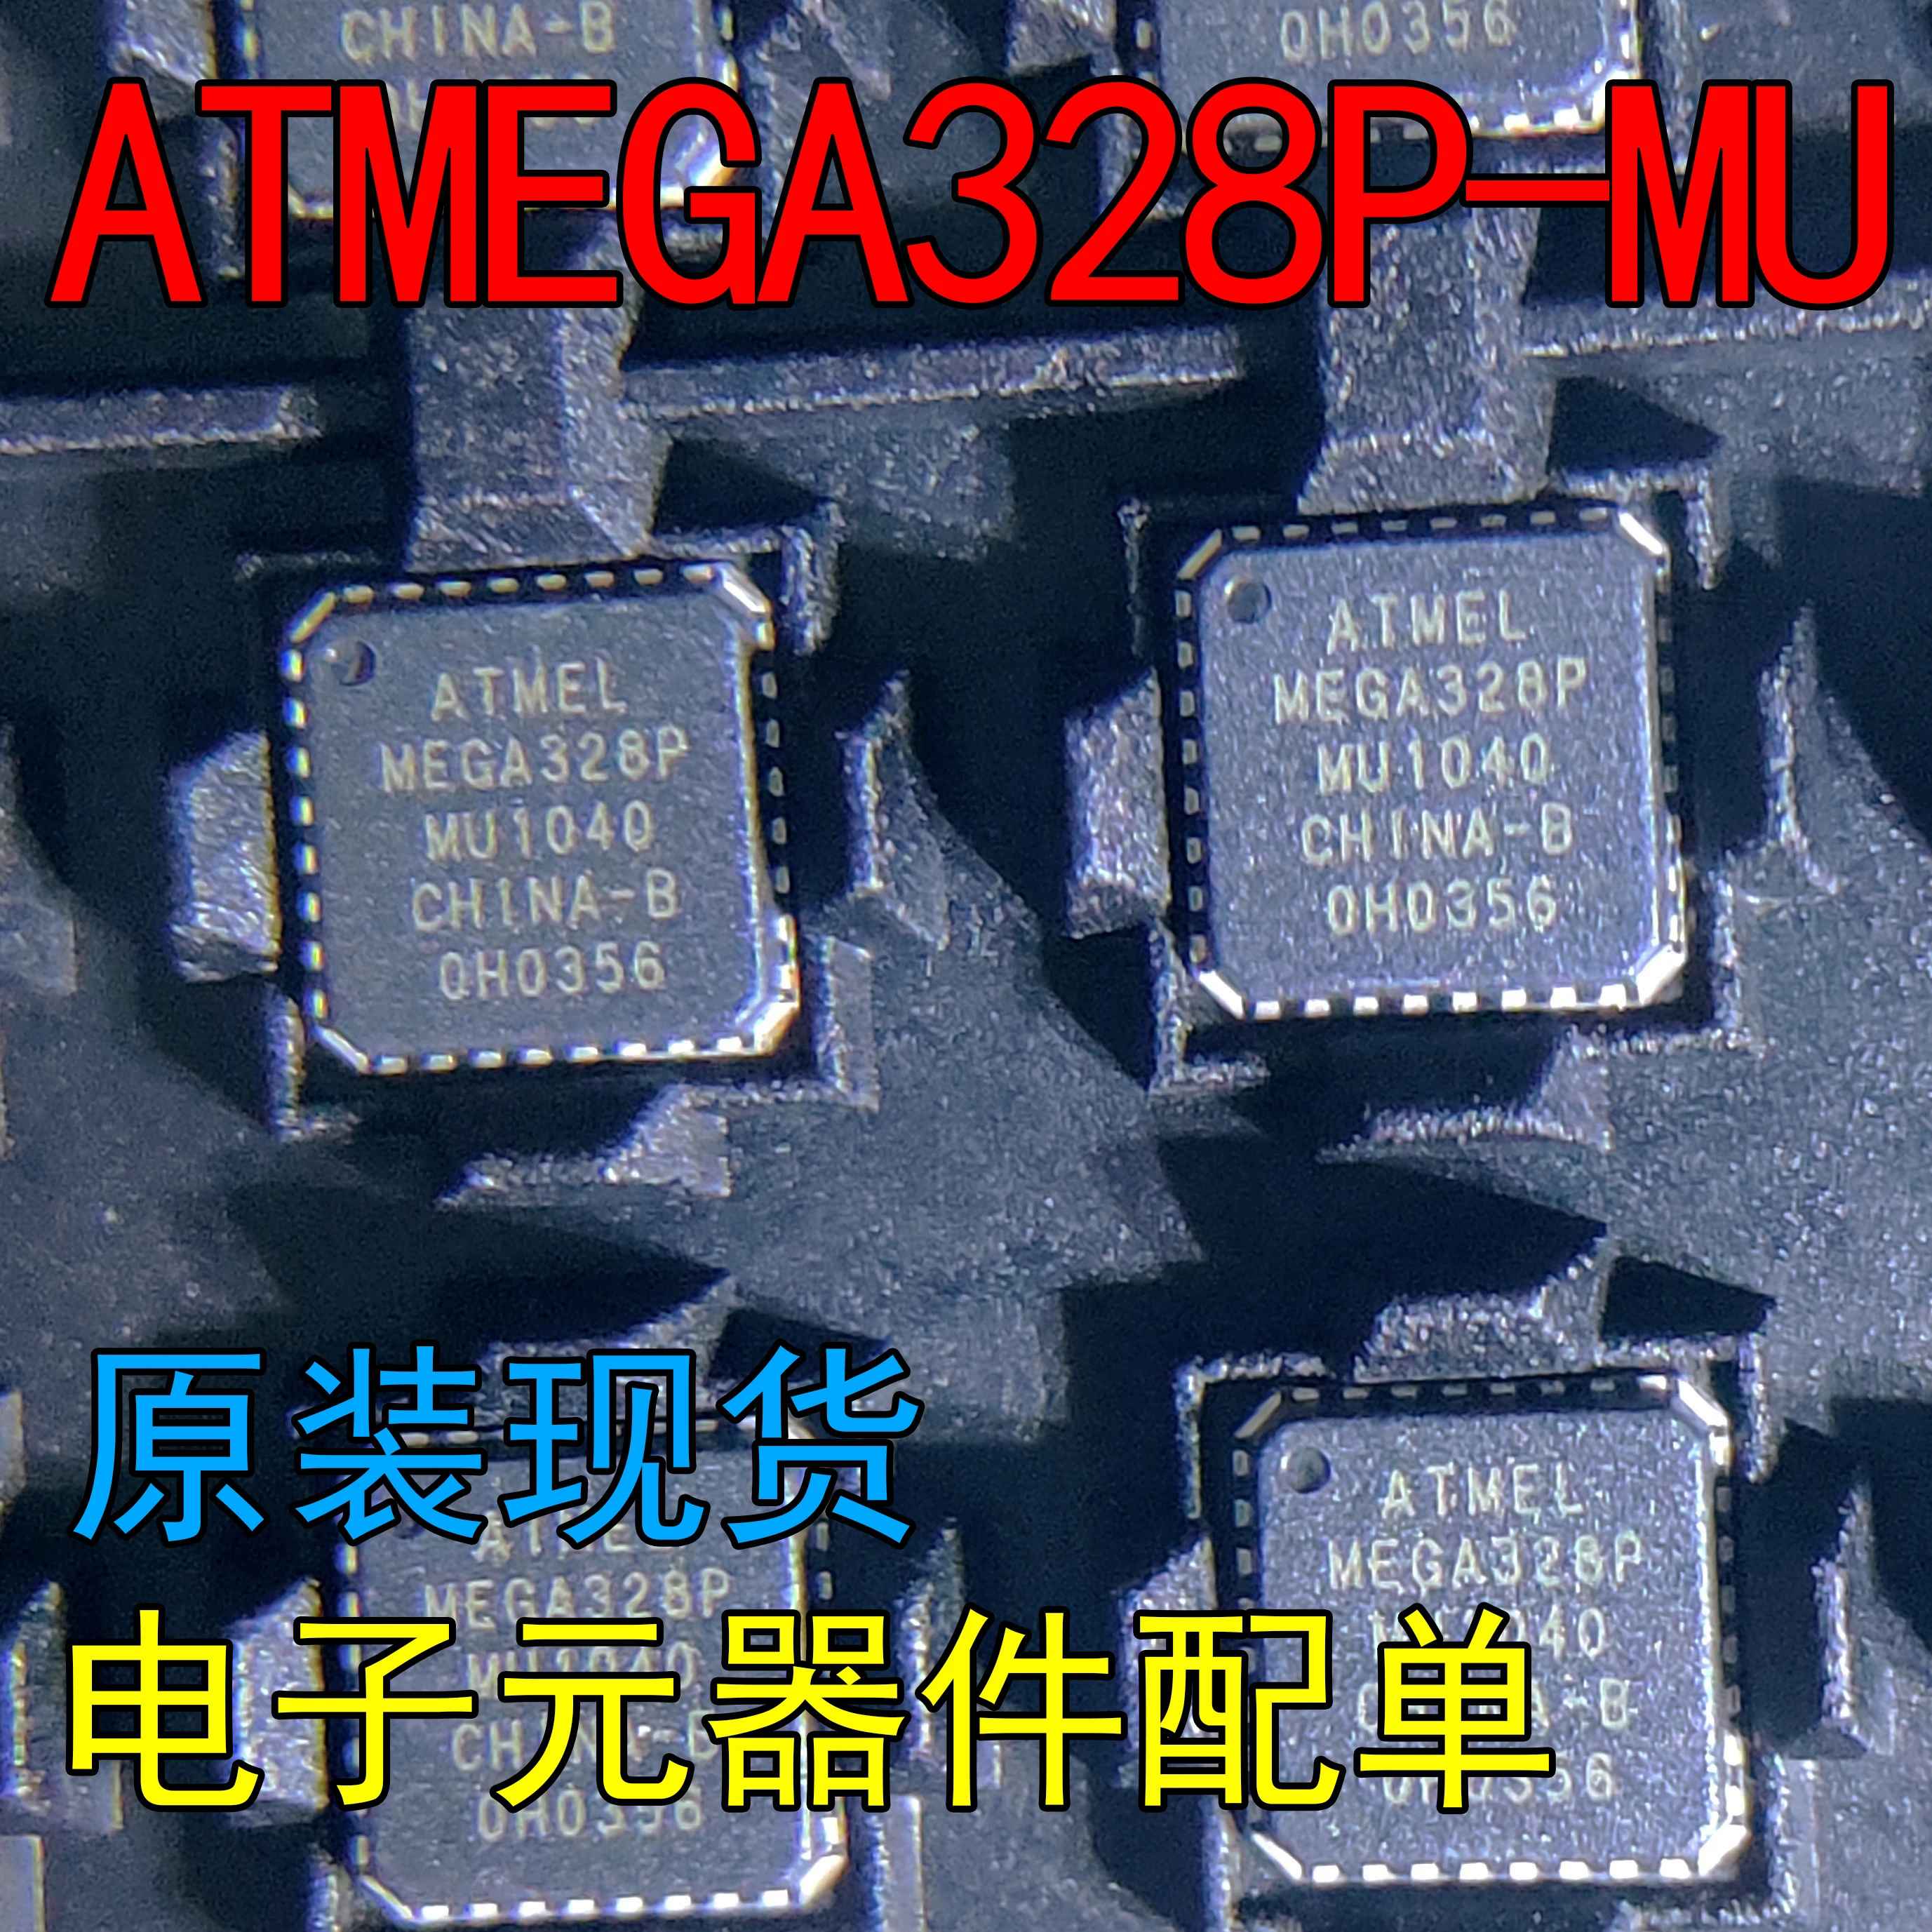 

1PCS/lot ATMEGA328P-MU ATMEGA328P MEGA328P QFN32 100% new imported original IC Chips fast delivery